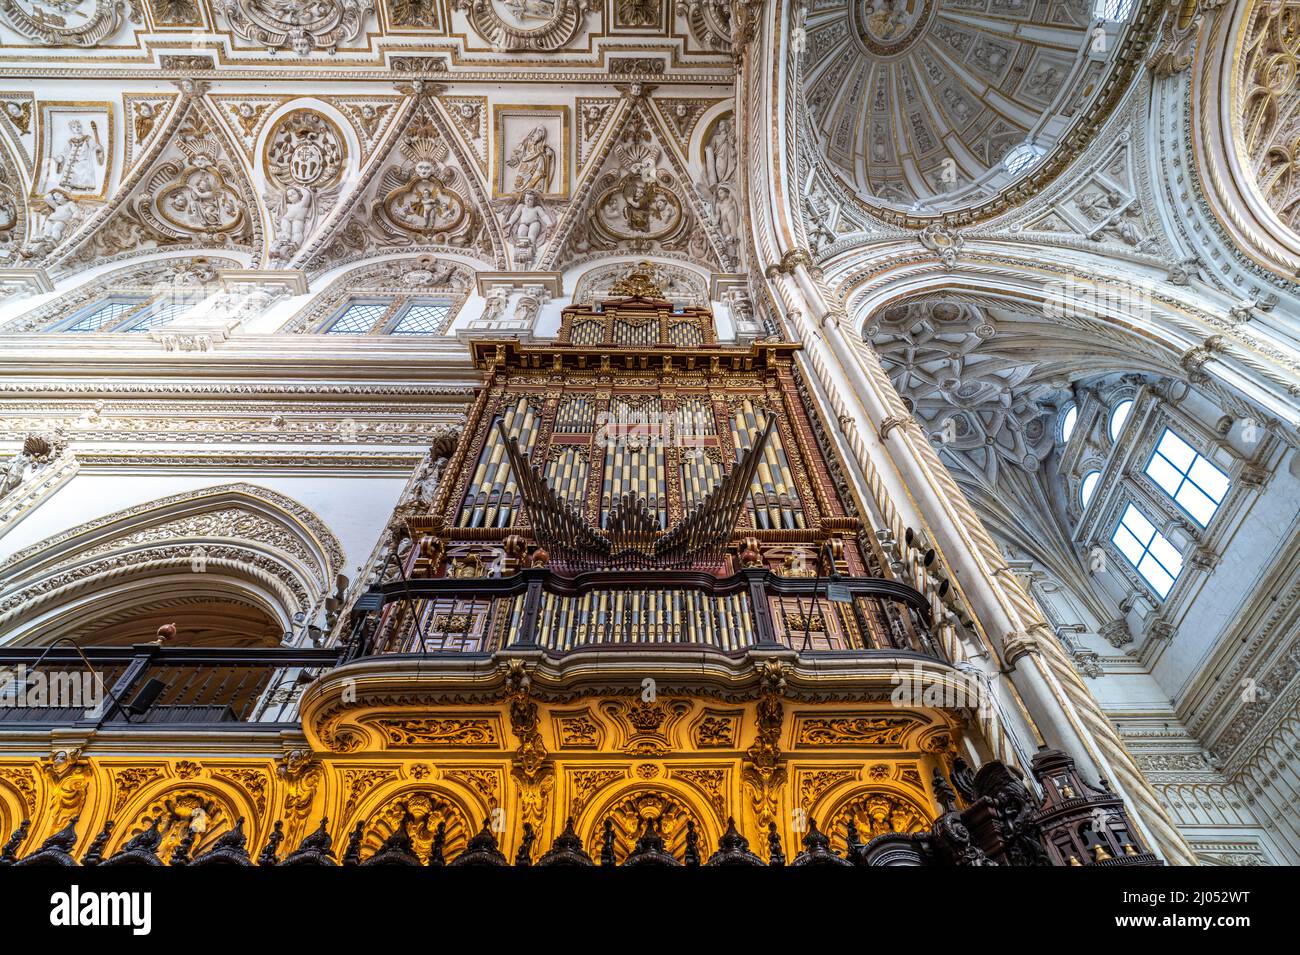 Orgel und Kuppel im Innenraum der Kathedrale - Mezquita - Catedral de Córdoba in Cordoba, Andalusien, Spanien | Orgel und Kuppel der Kathedrale - M Stockfoto